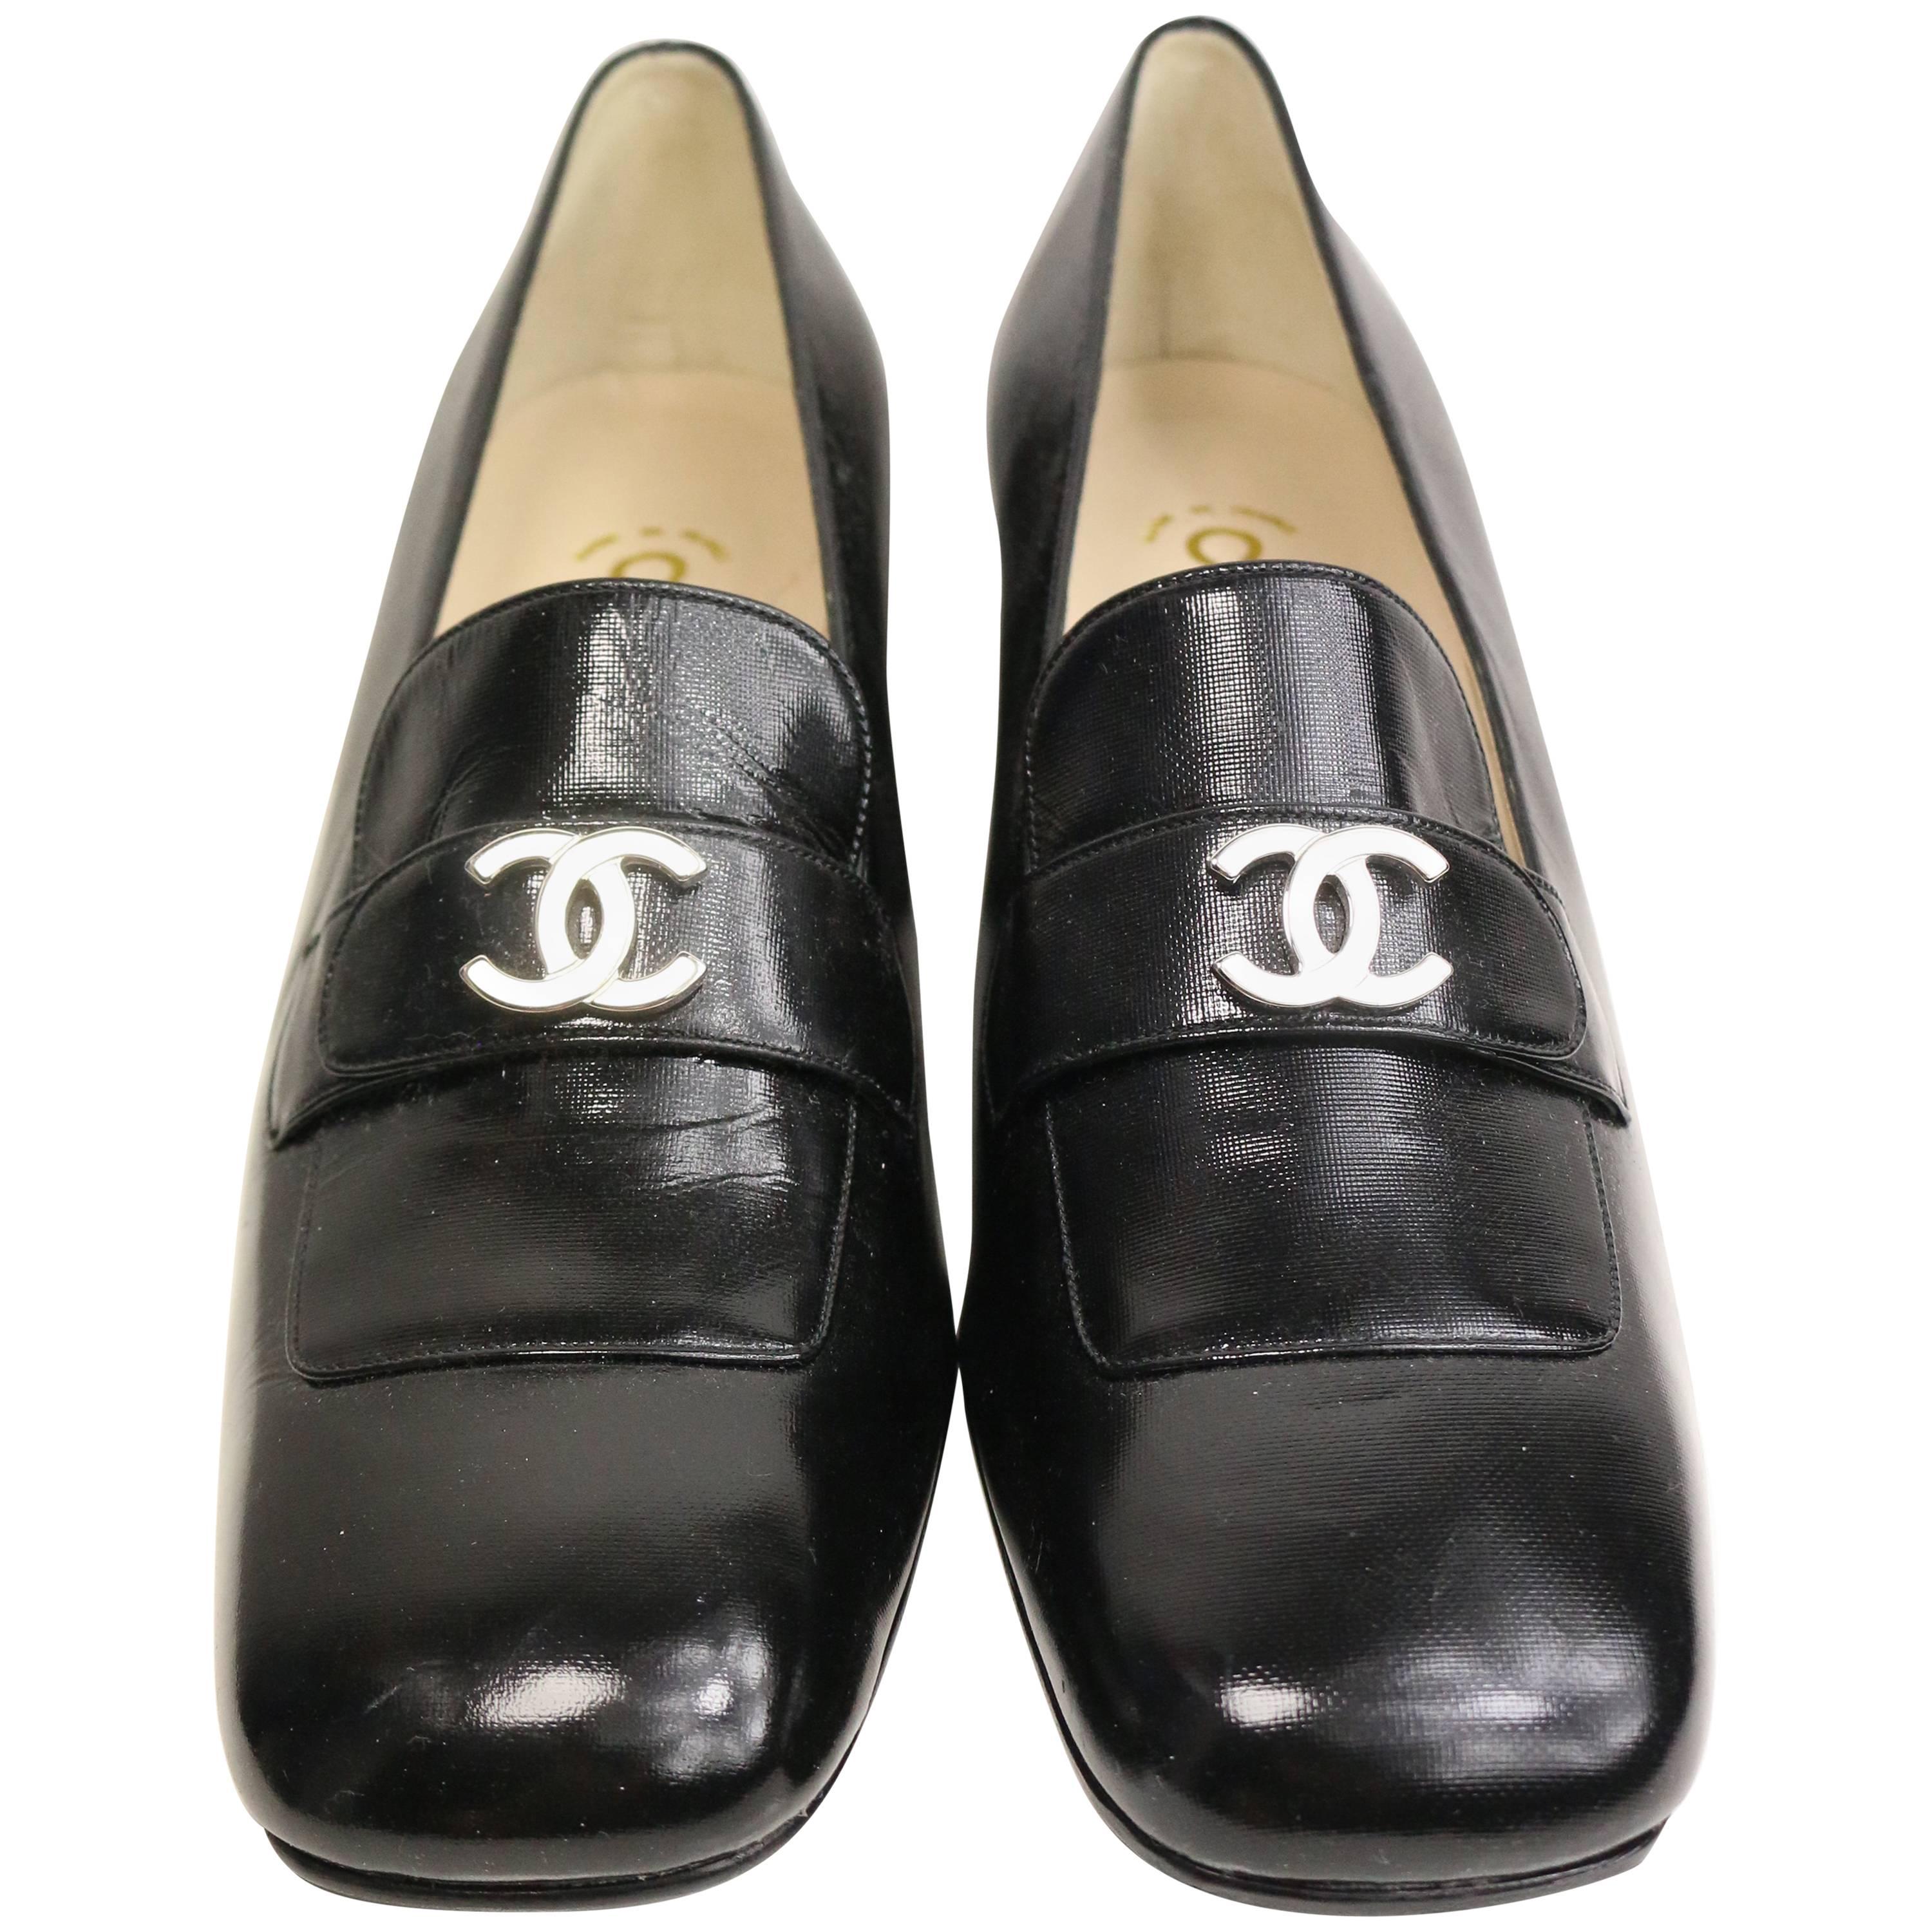 Chanel Black Patent Silver "CC" Logo Square Toe Shoes 